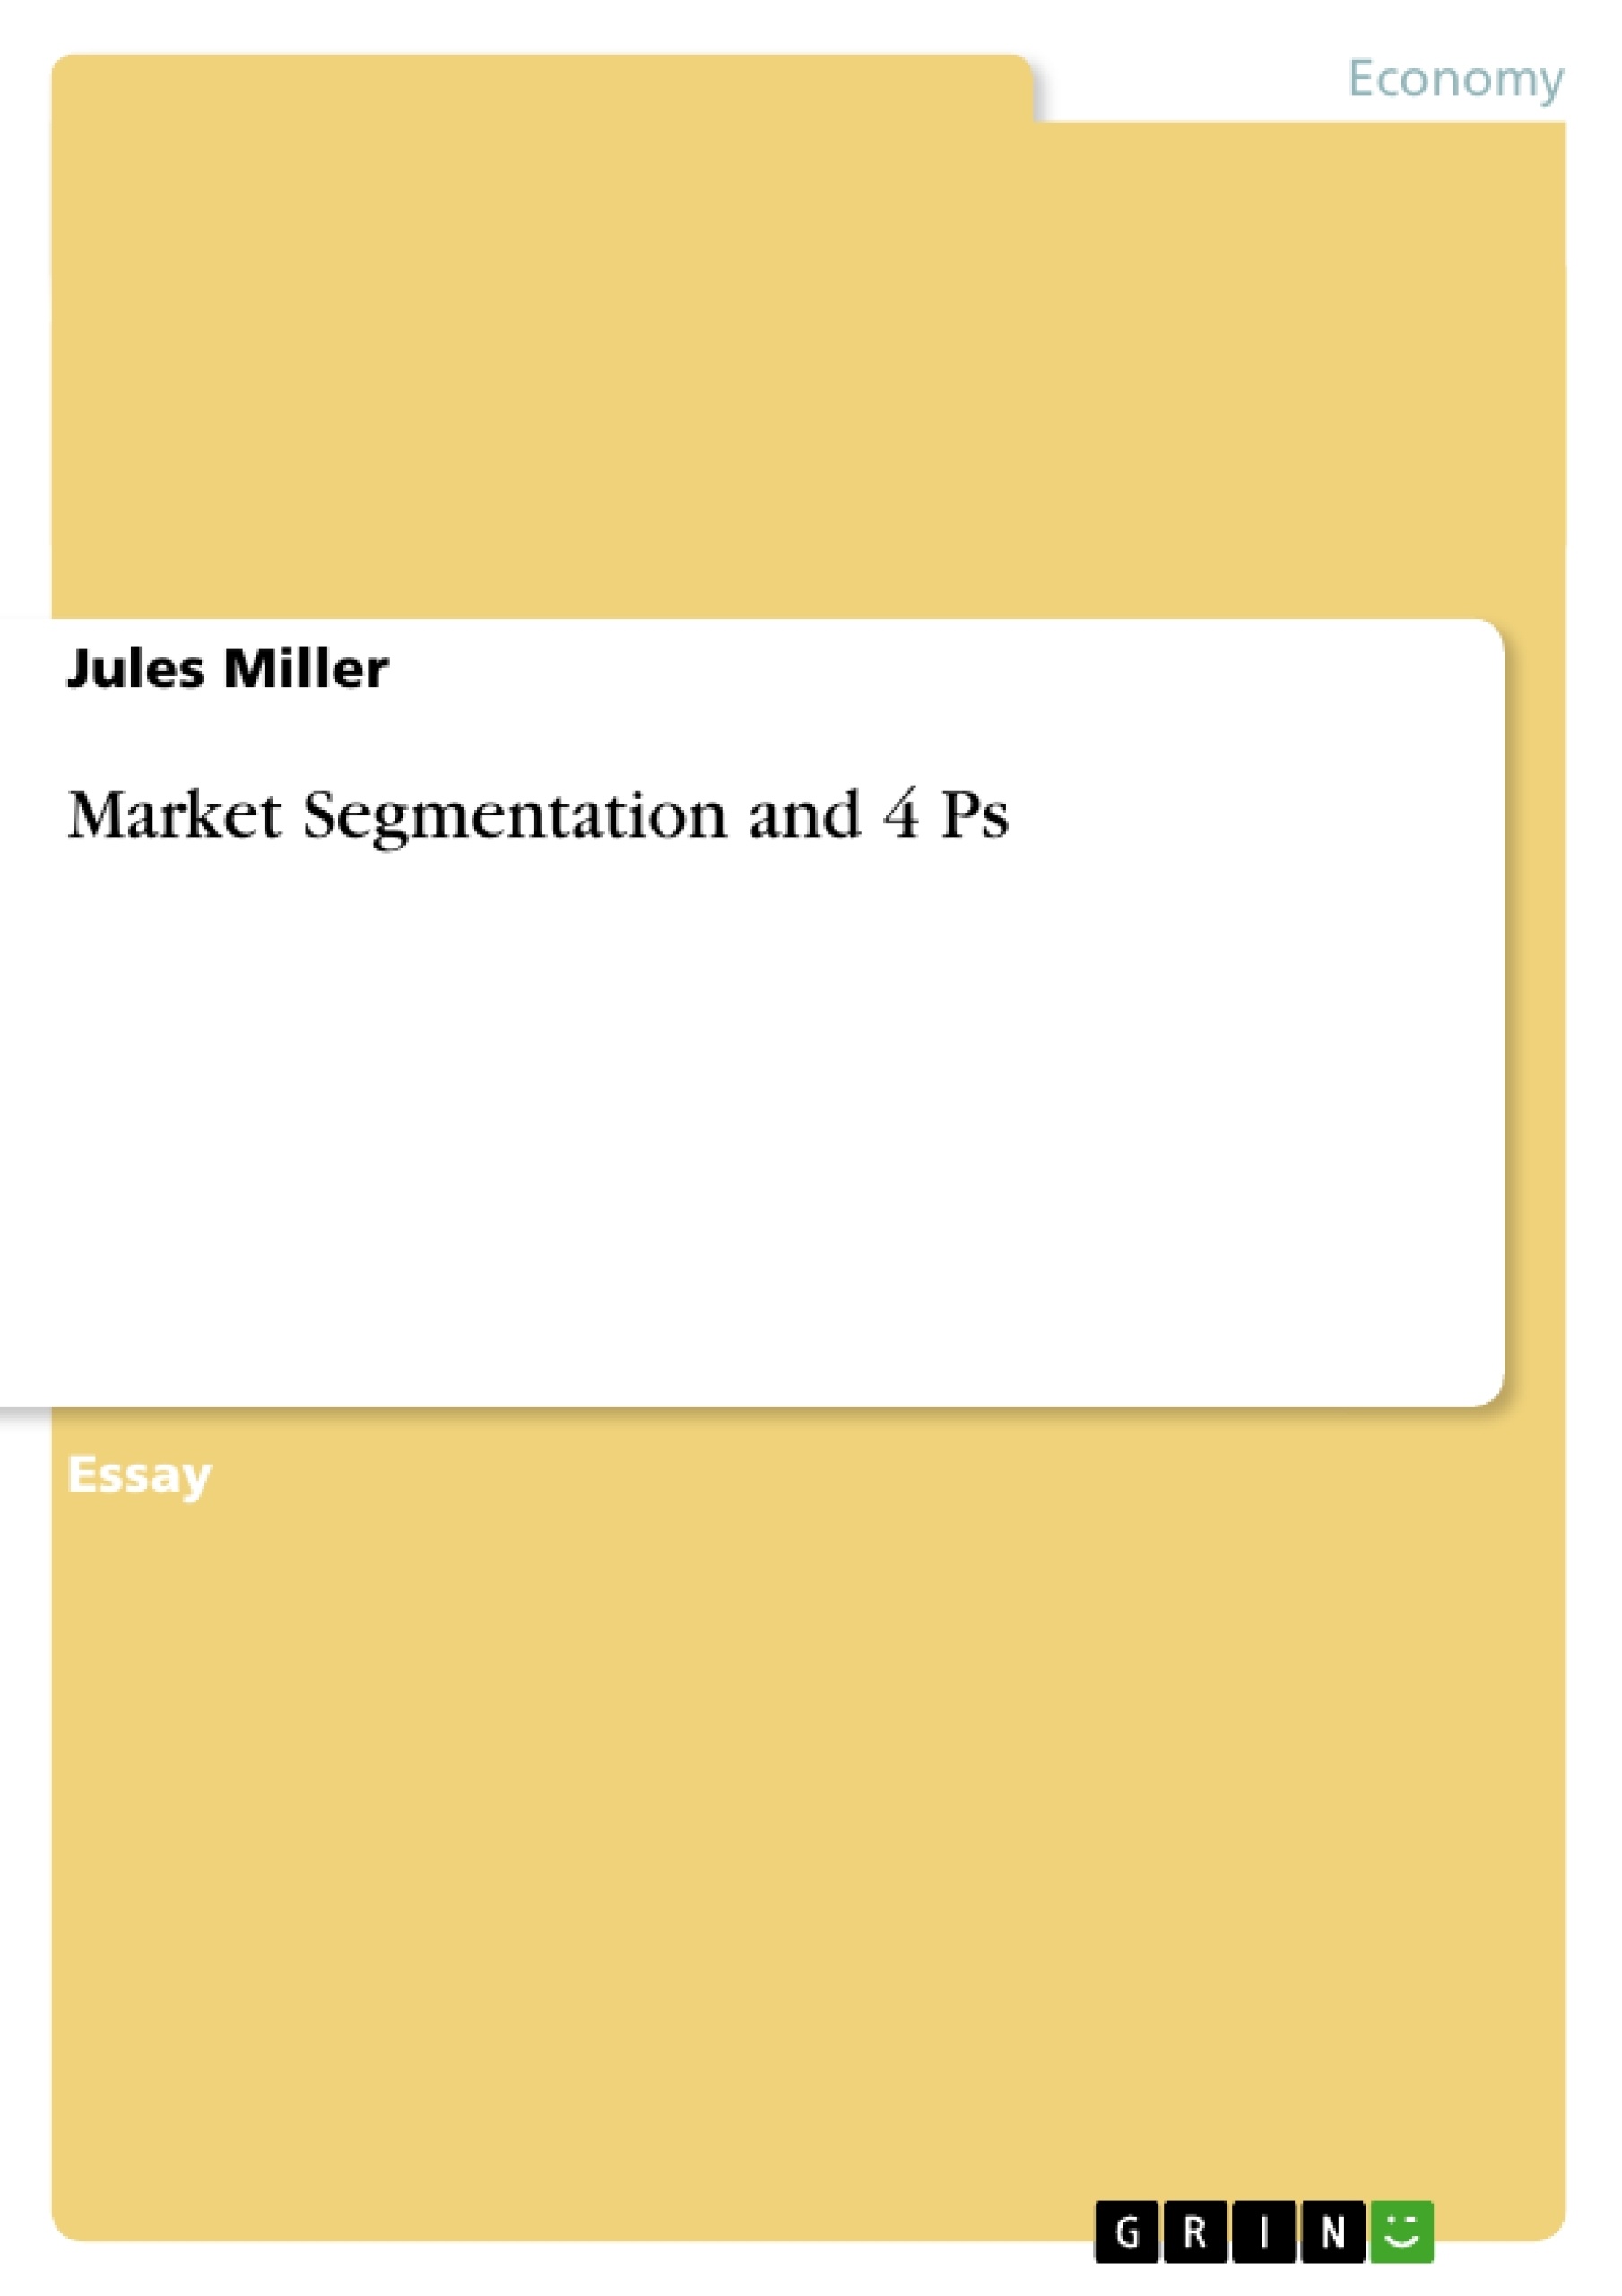 Title: Market Segmentation and 4 Ps